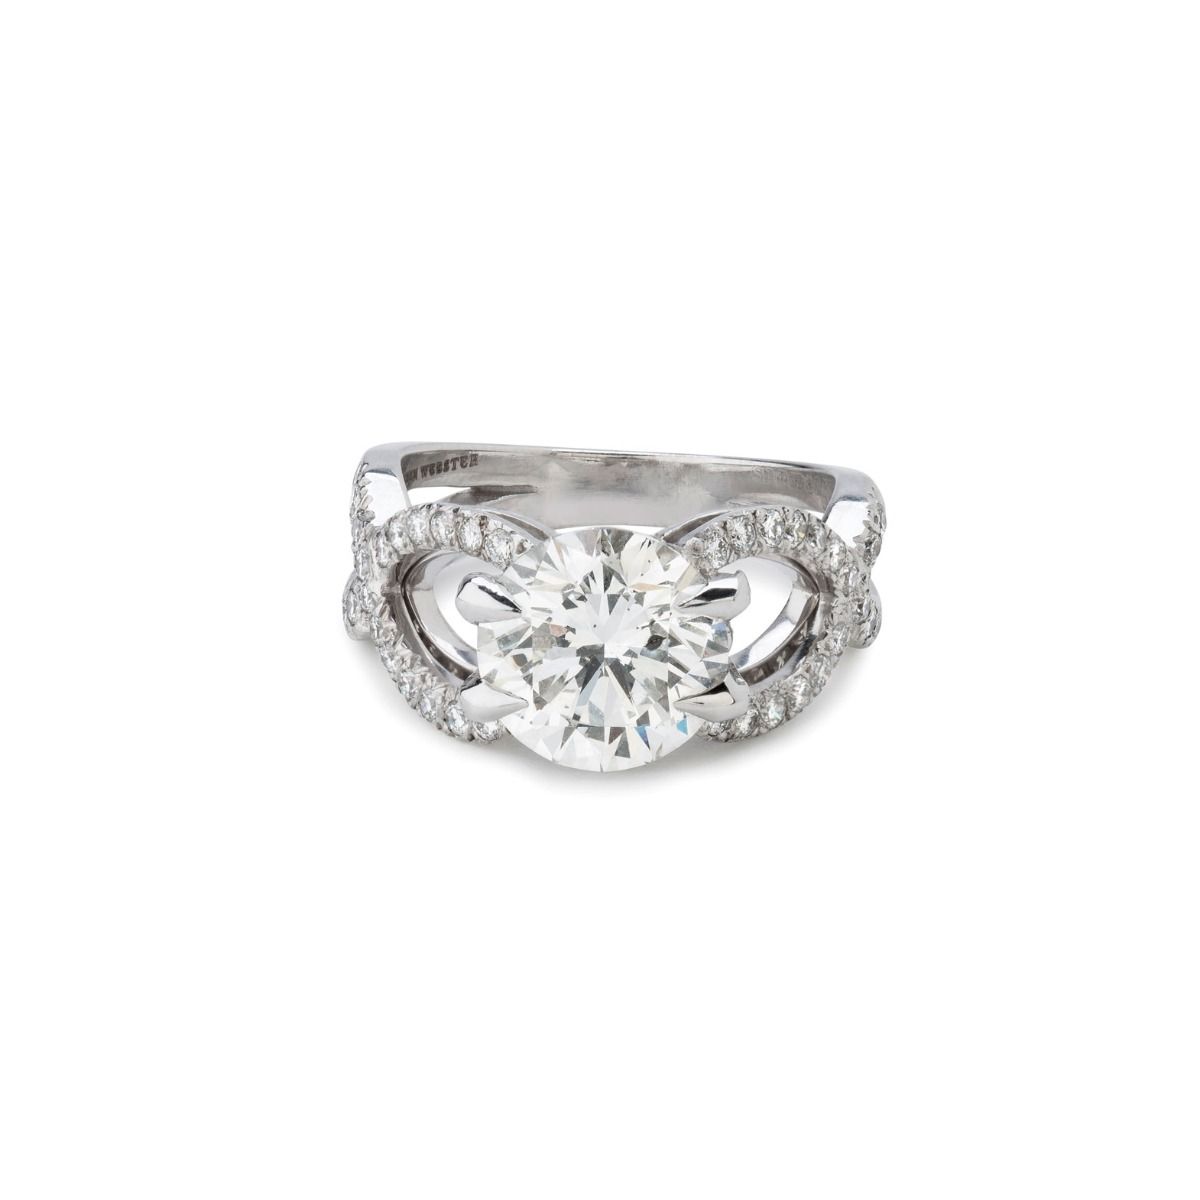 Forget me knot diamond engagement ring, Stephen Webster (Photo credit: Stephen Webster)